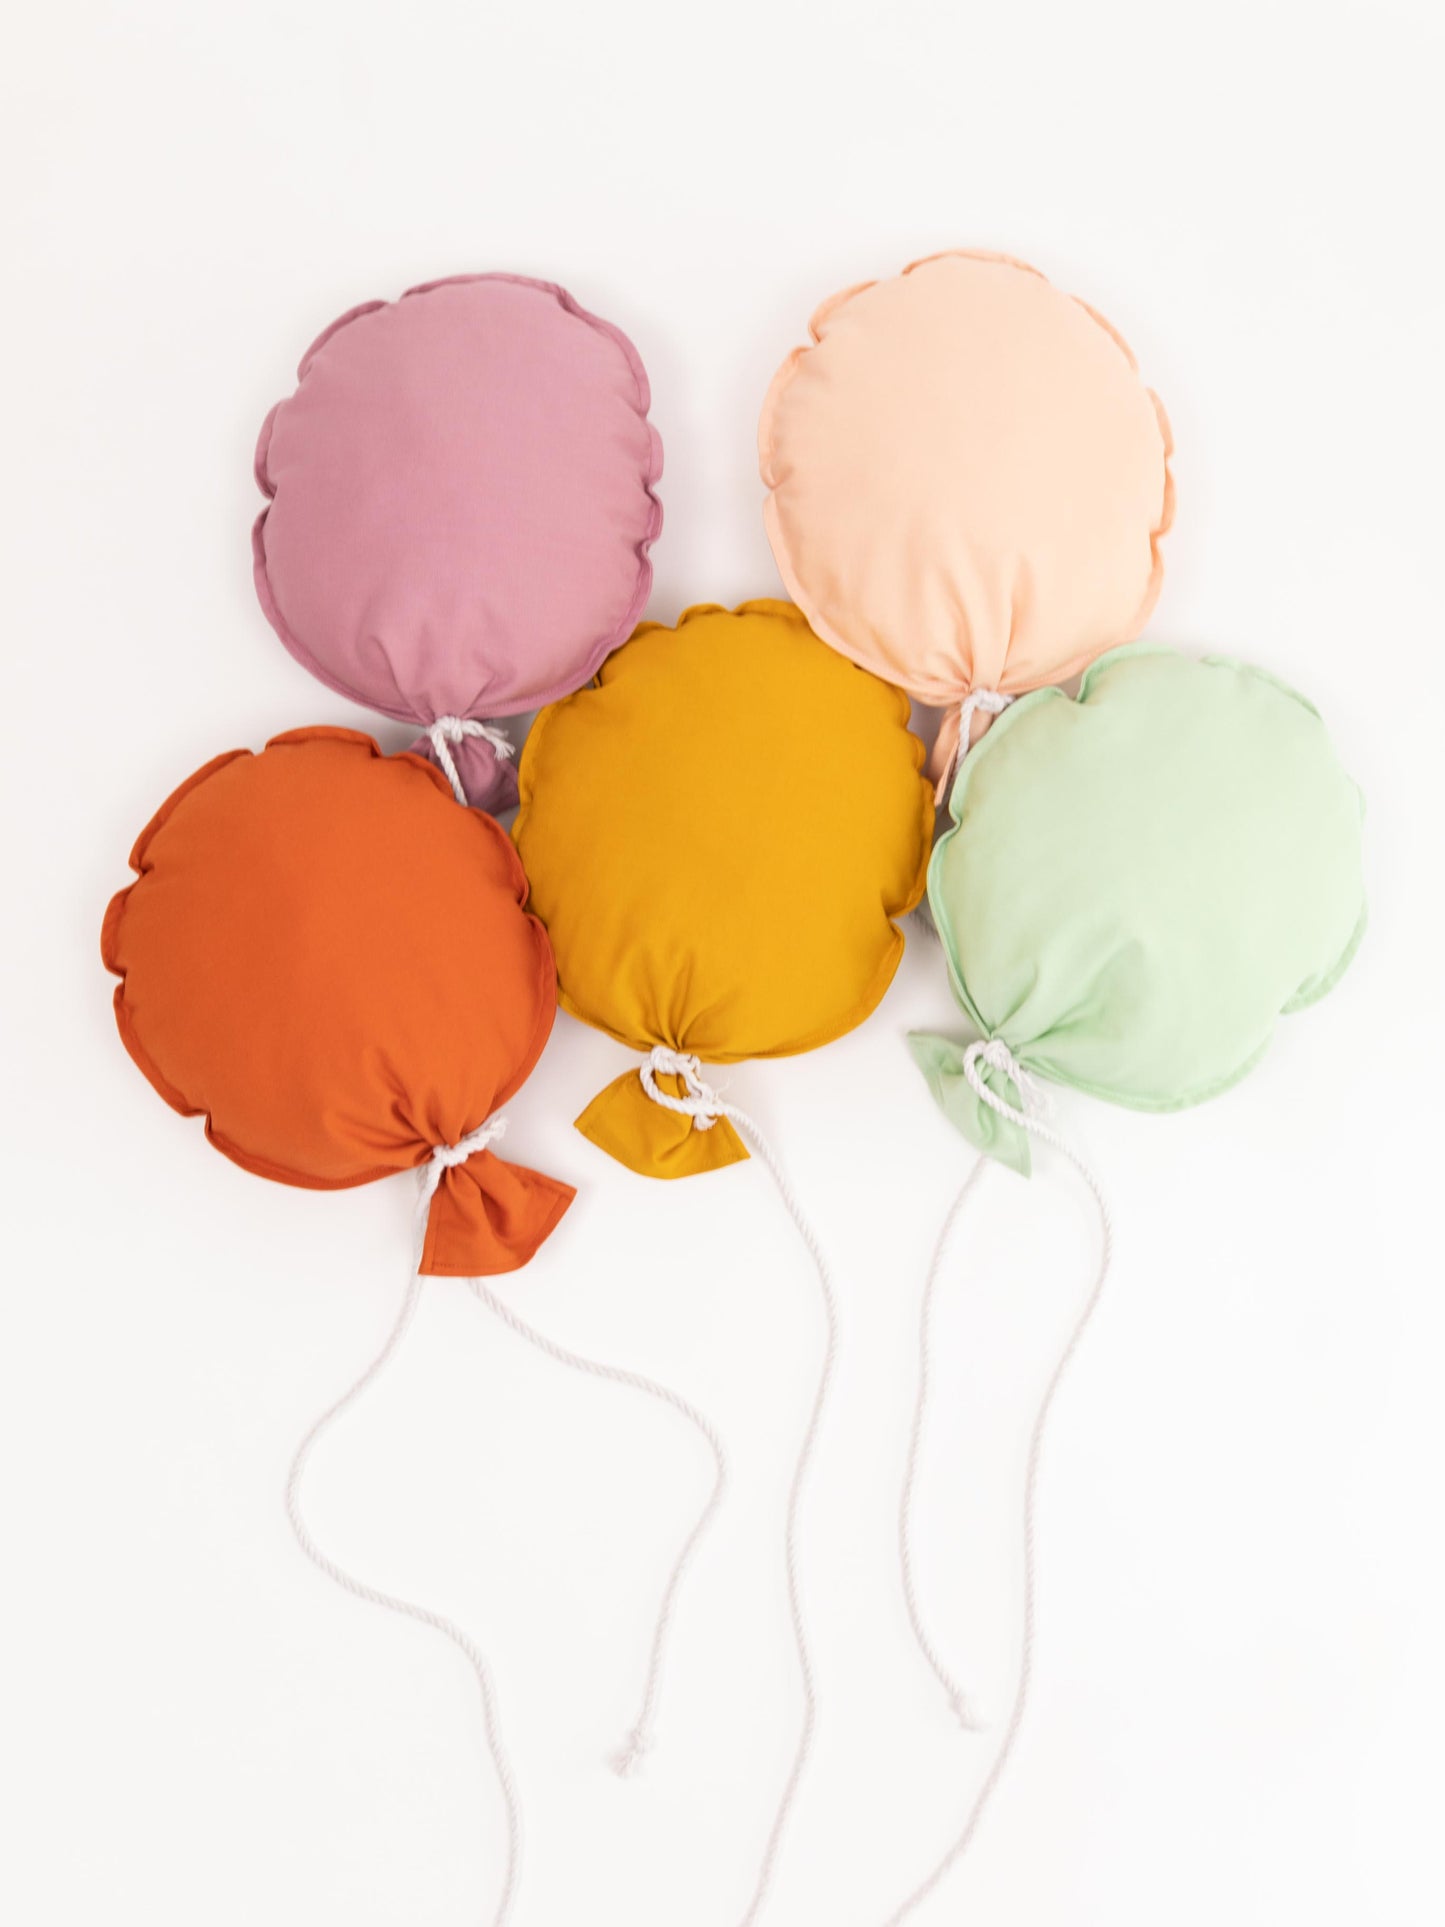 Kinderzimmer Wanddeko 'Luftballon' Aprikose Curry Terracotta